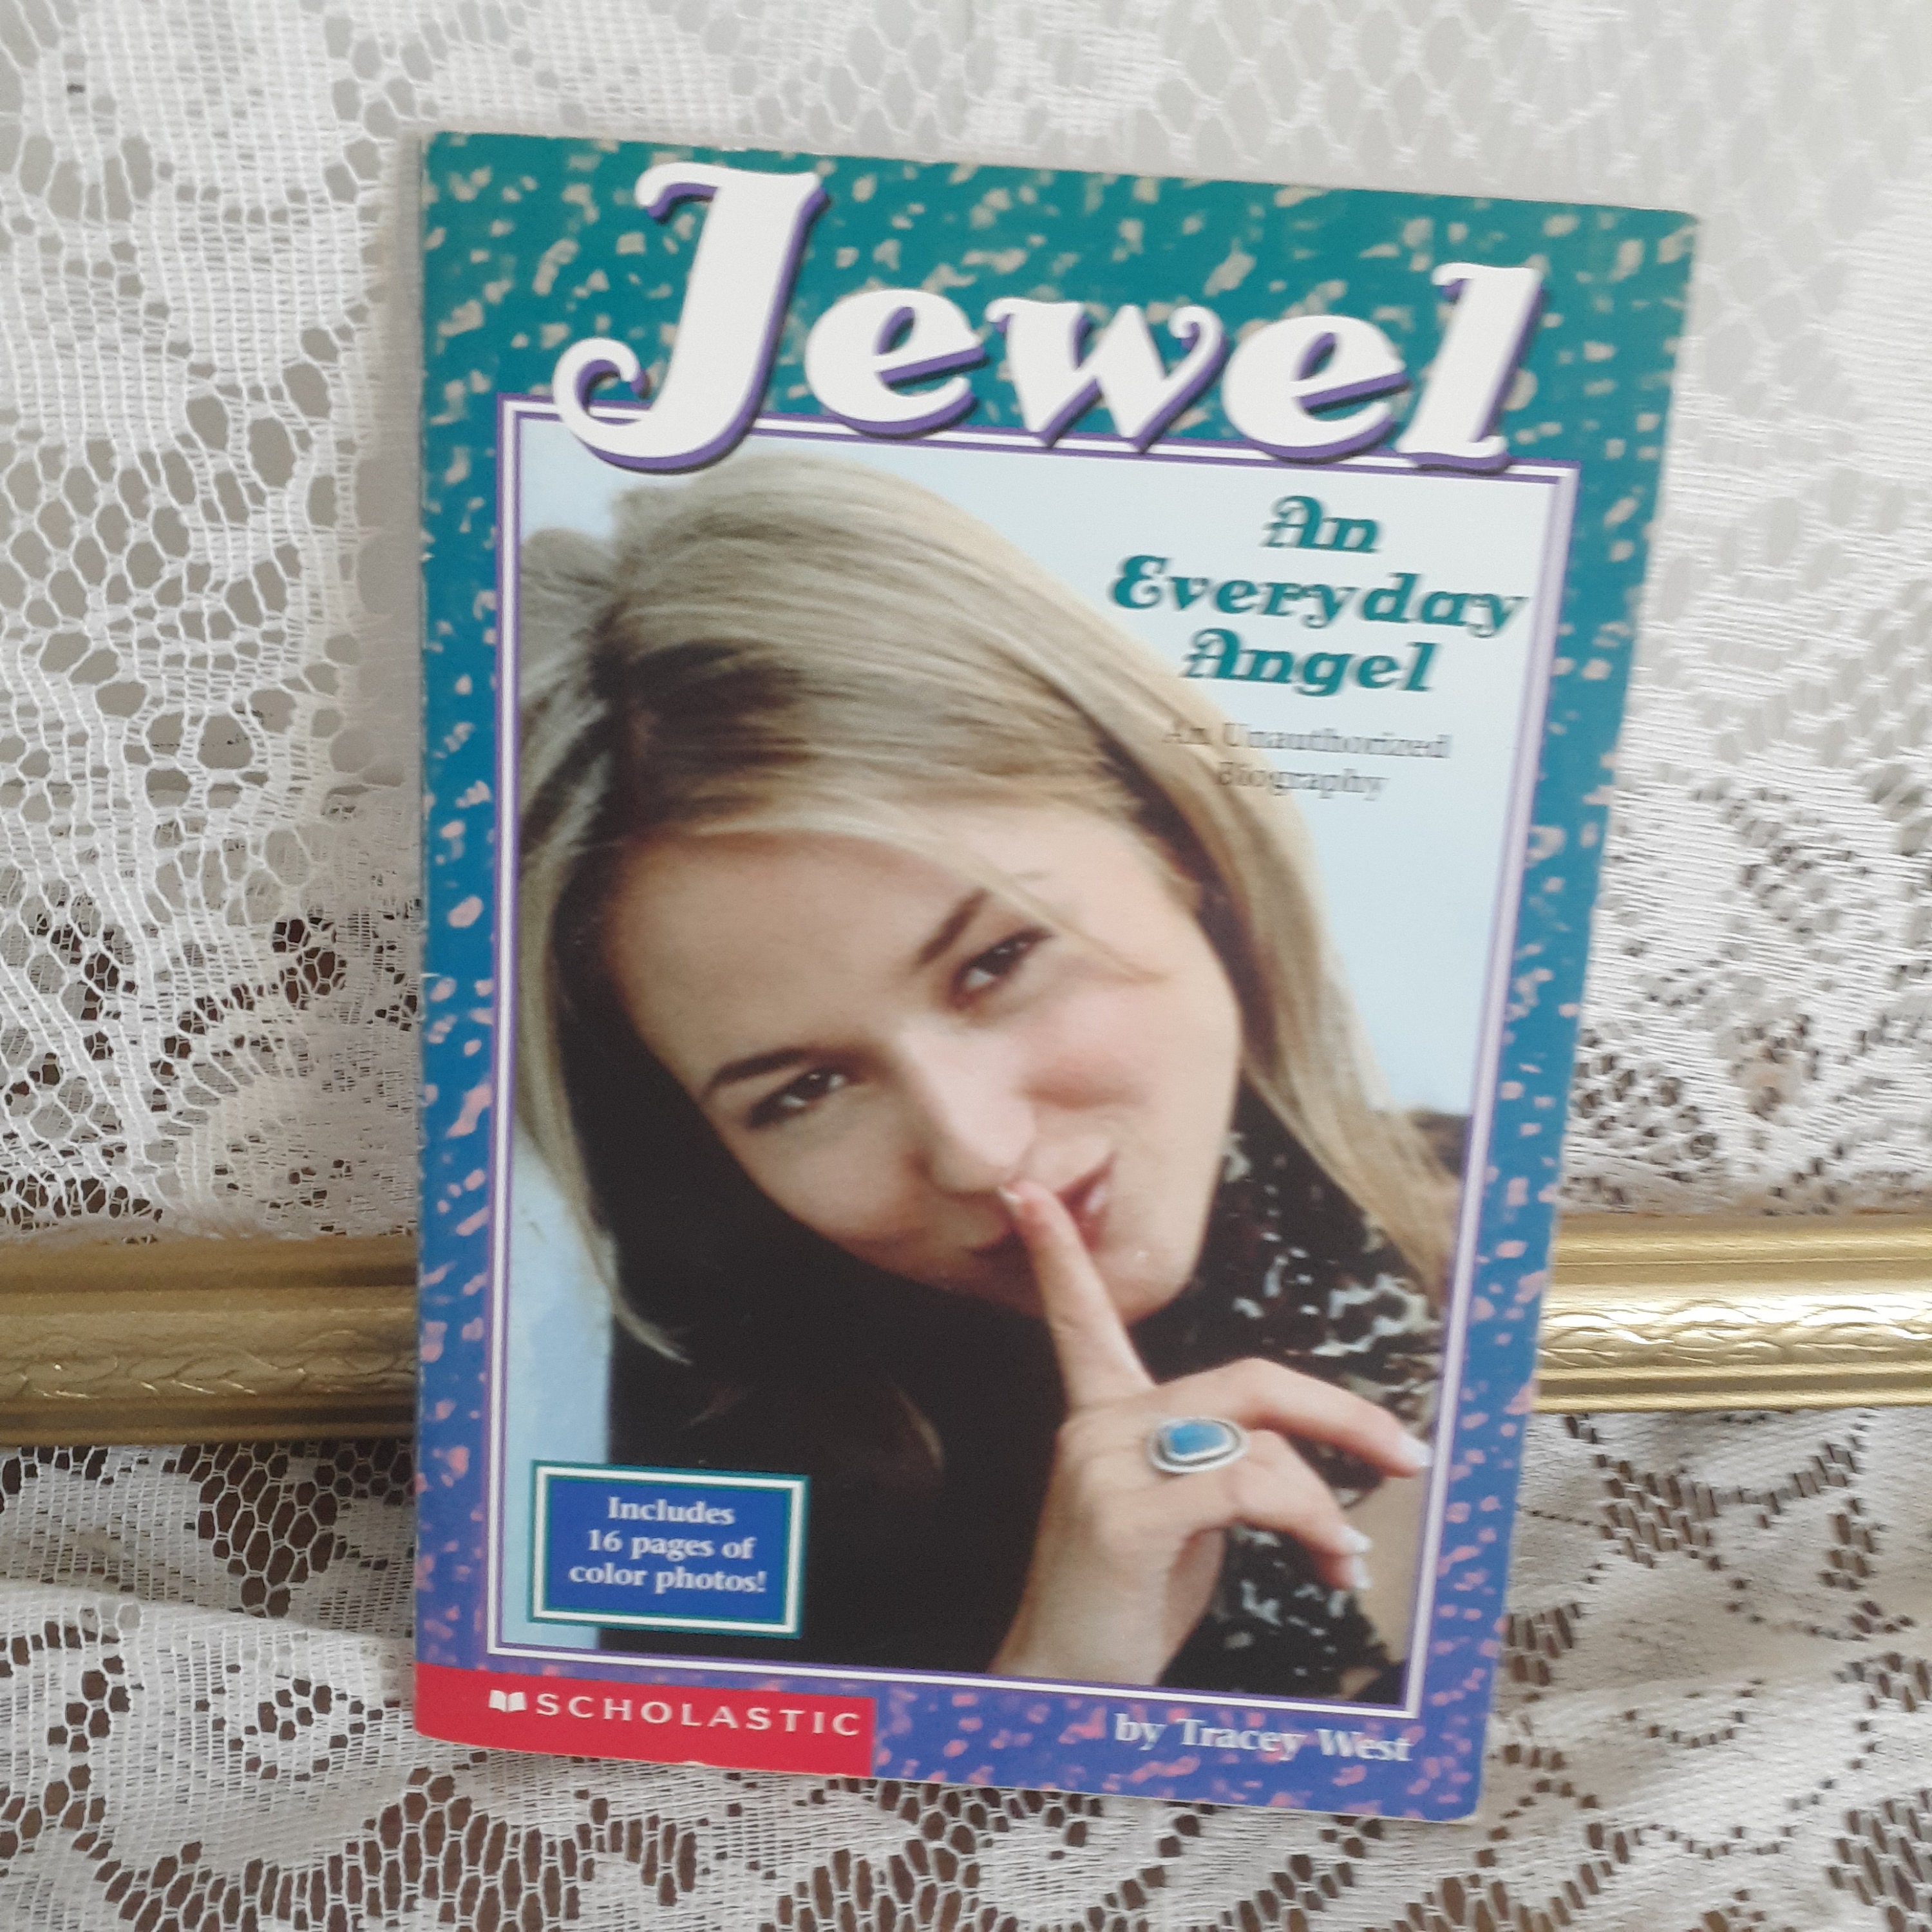 Jewel (Pop Singer) - Age, Family, Bio